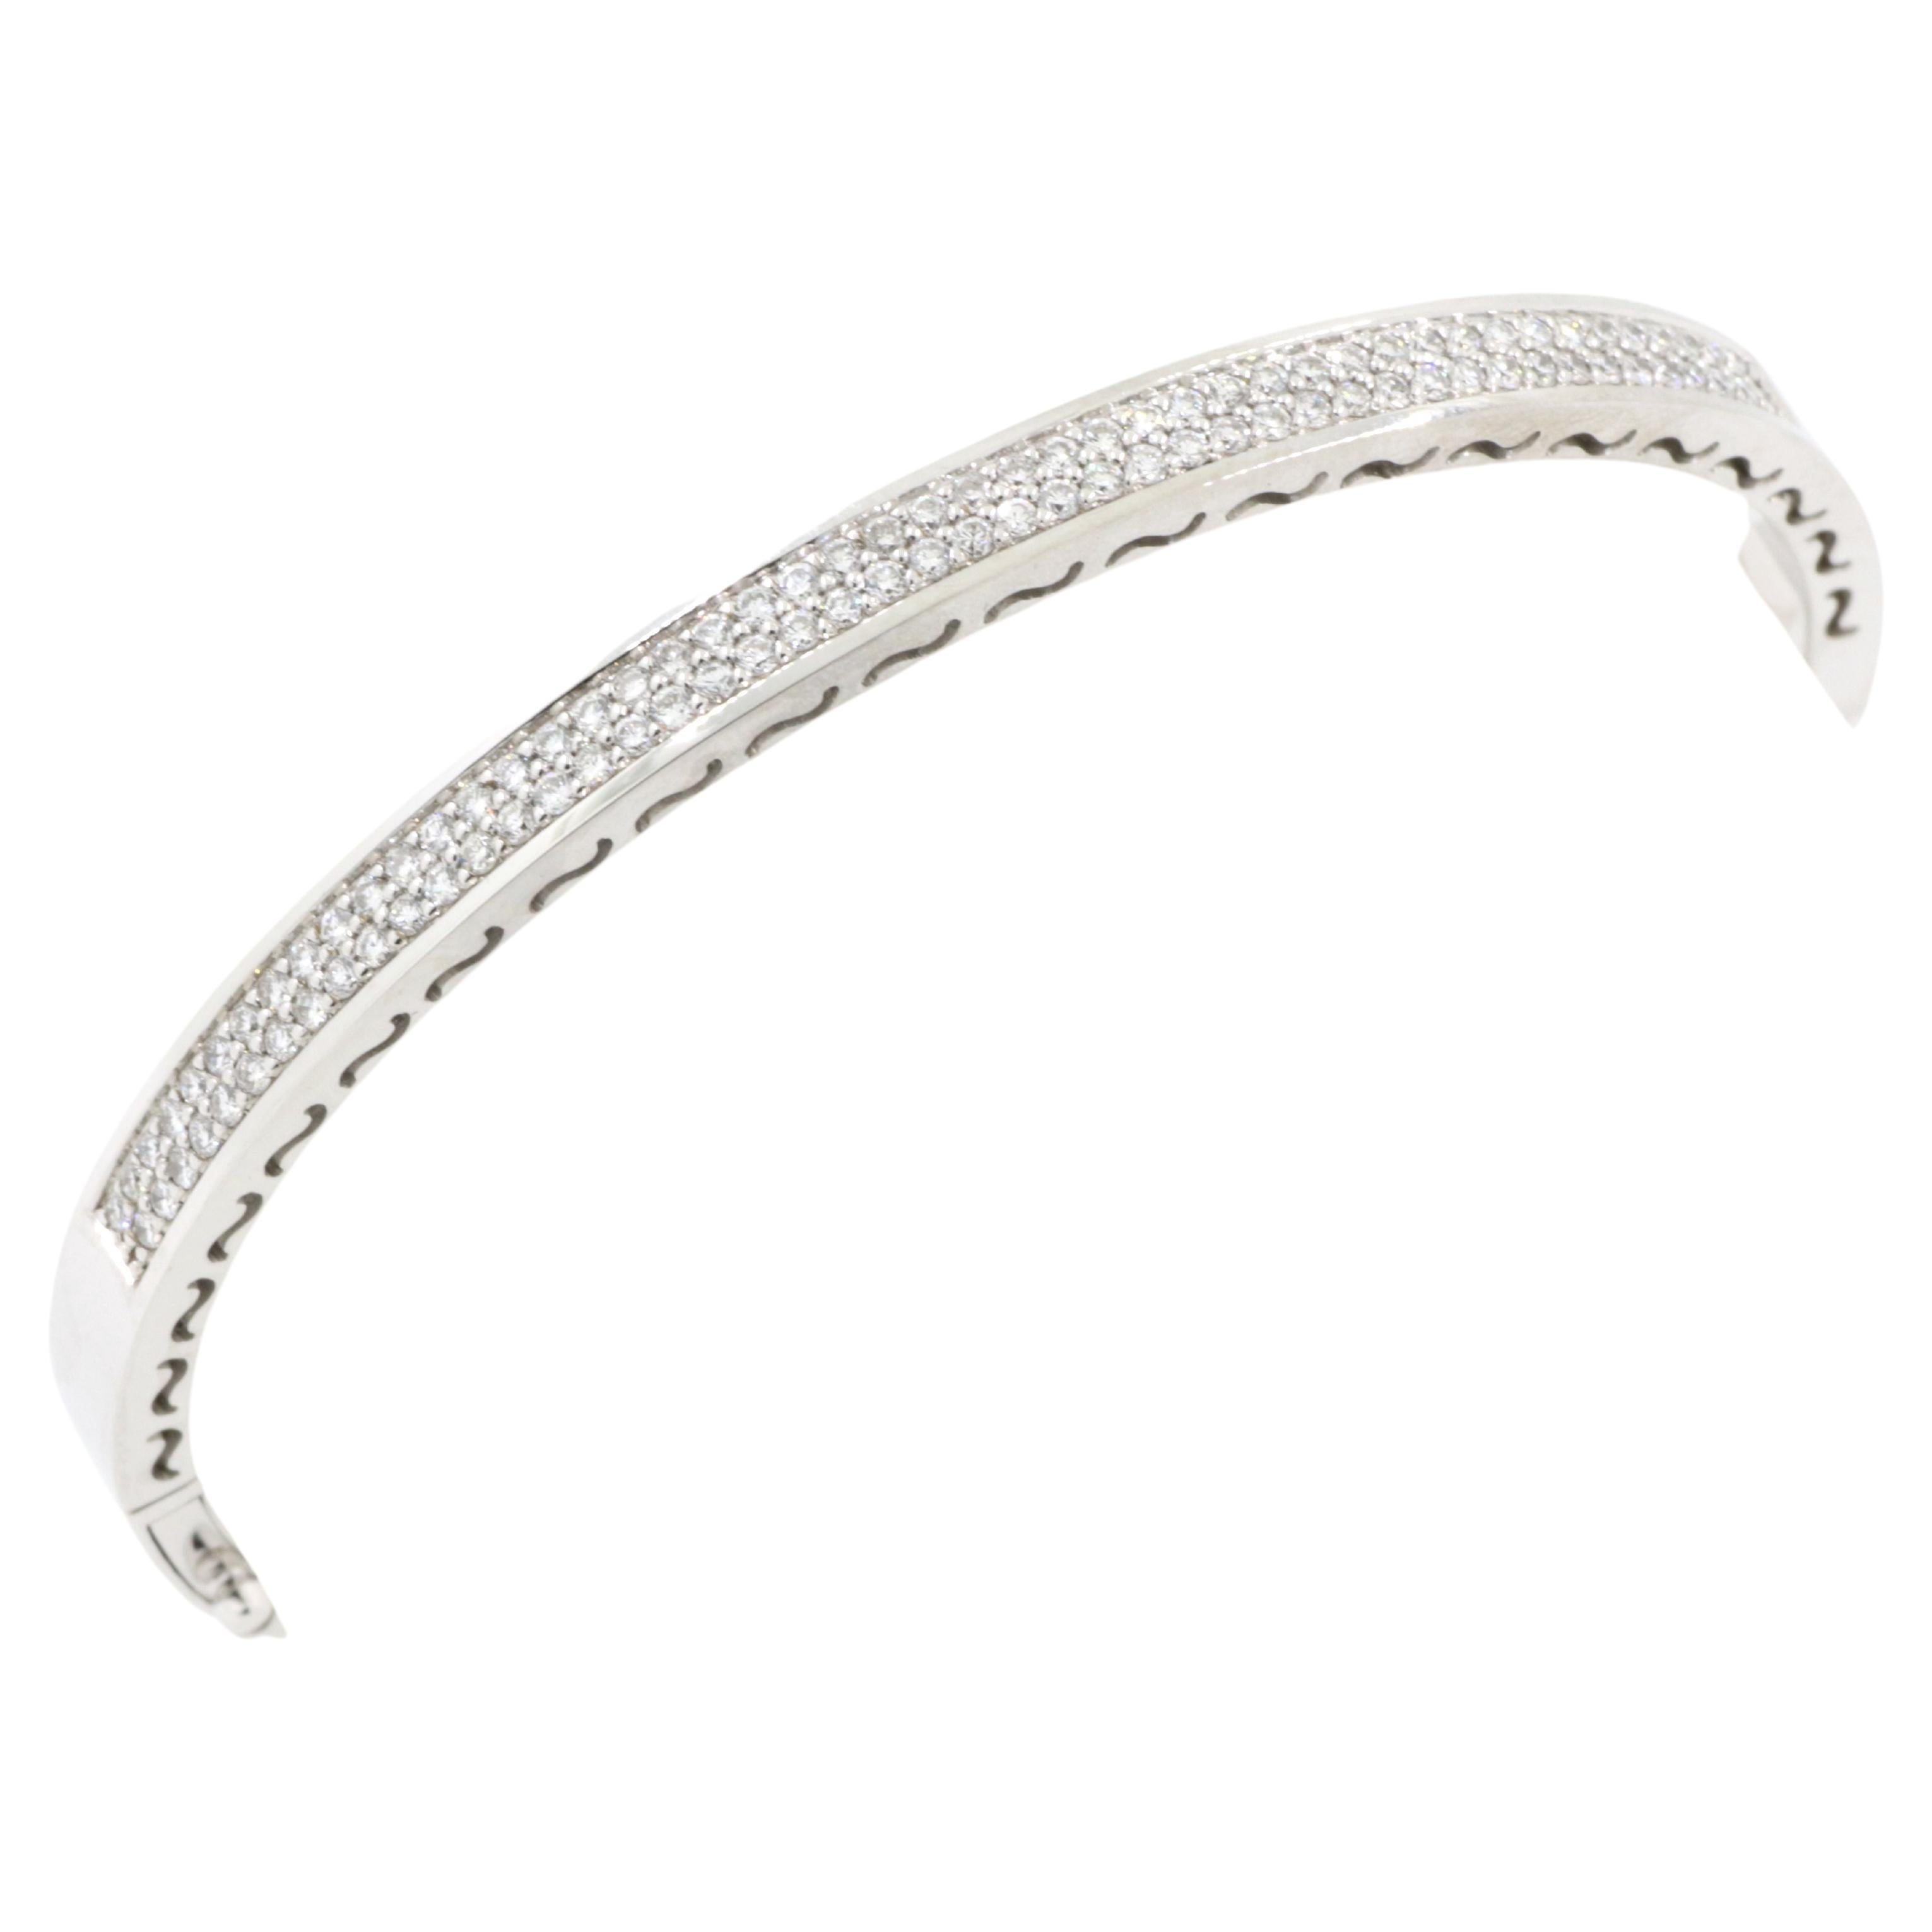 0.97 Carat Diamond Bracelet Bangle in 18 Karat White Gold